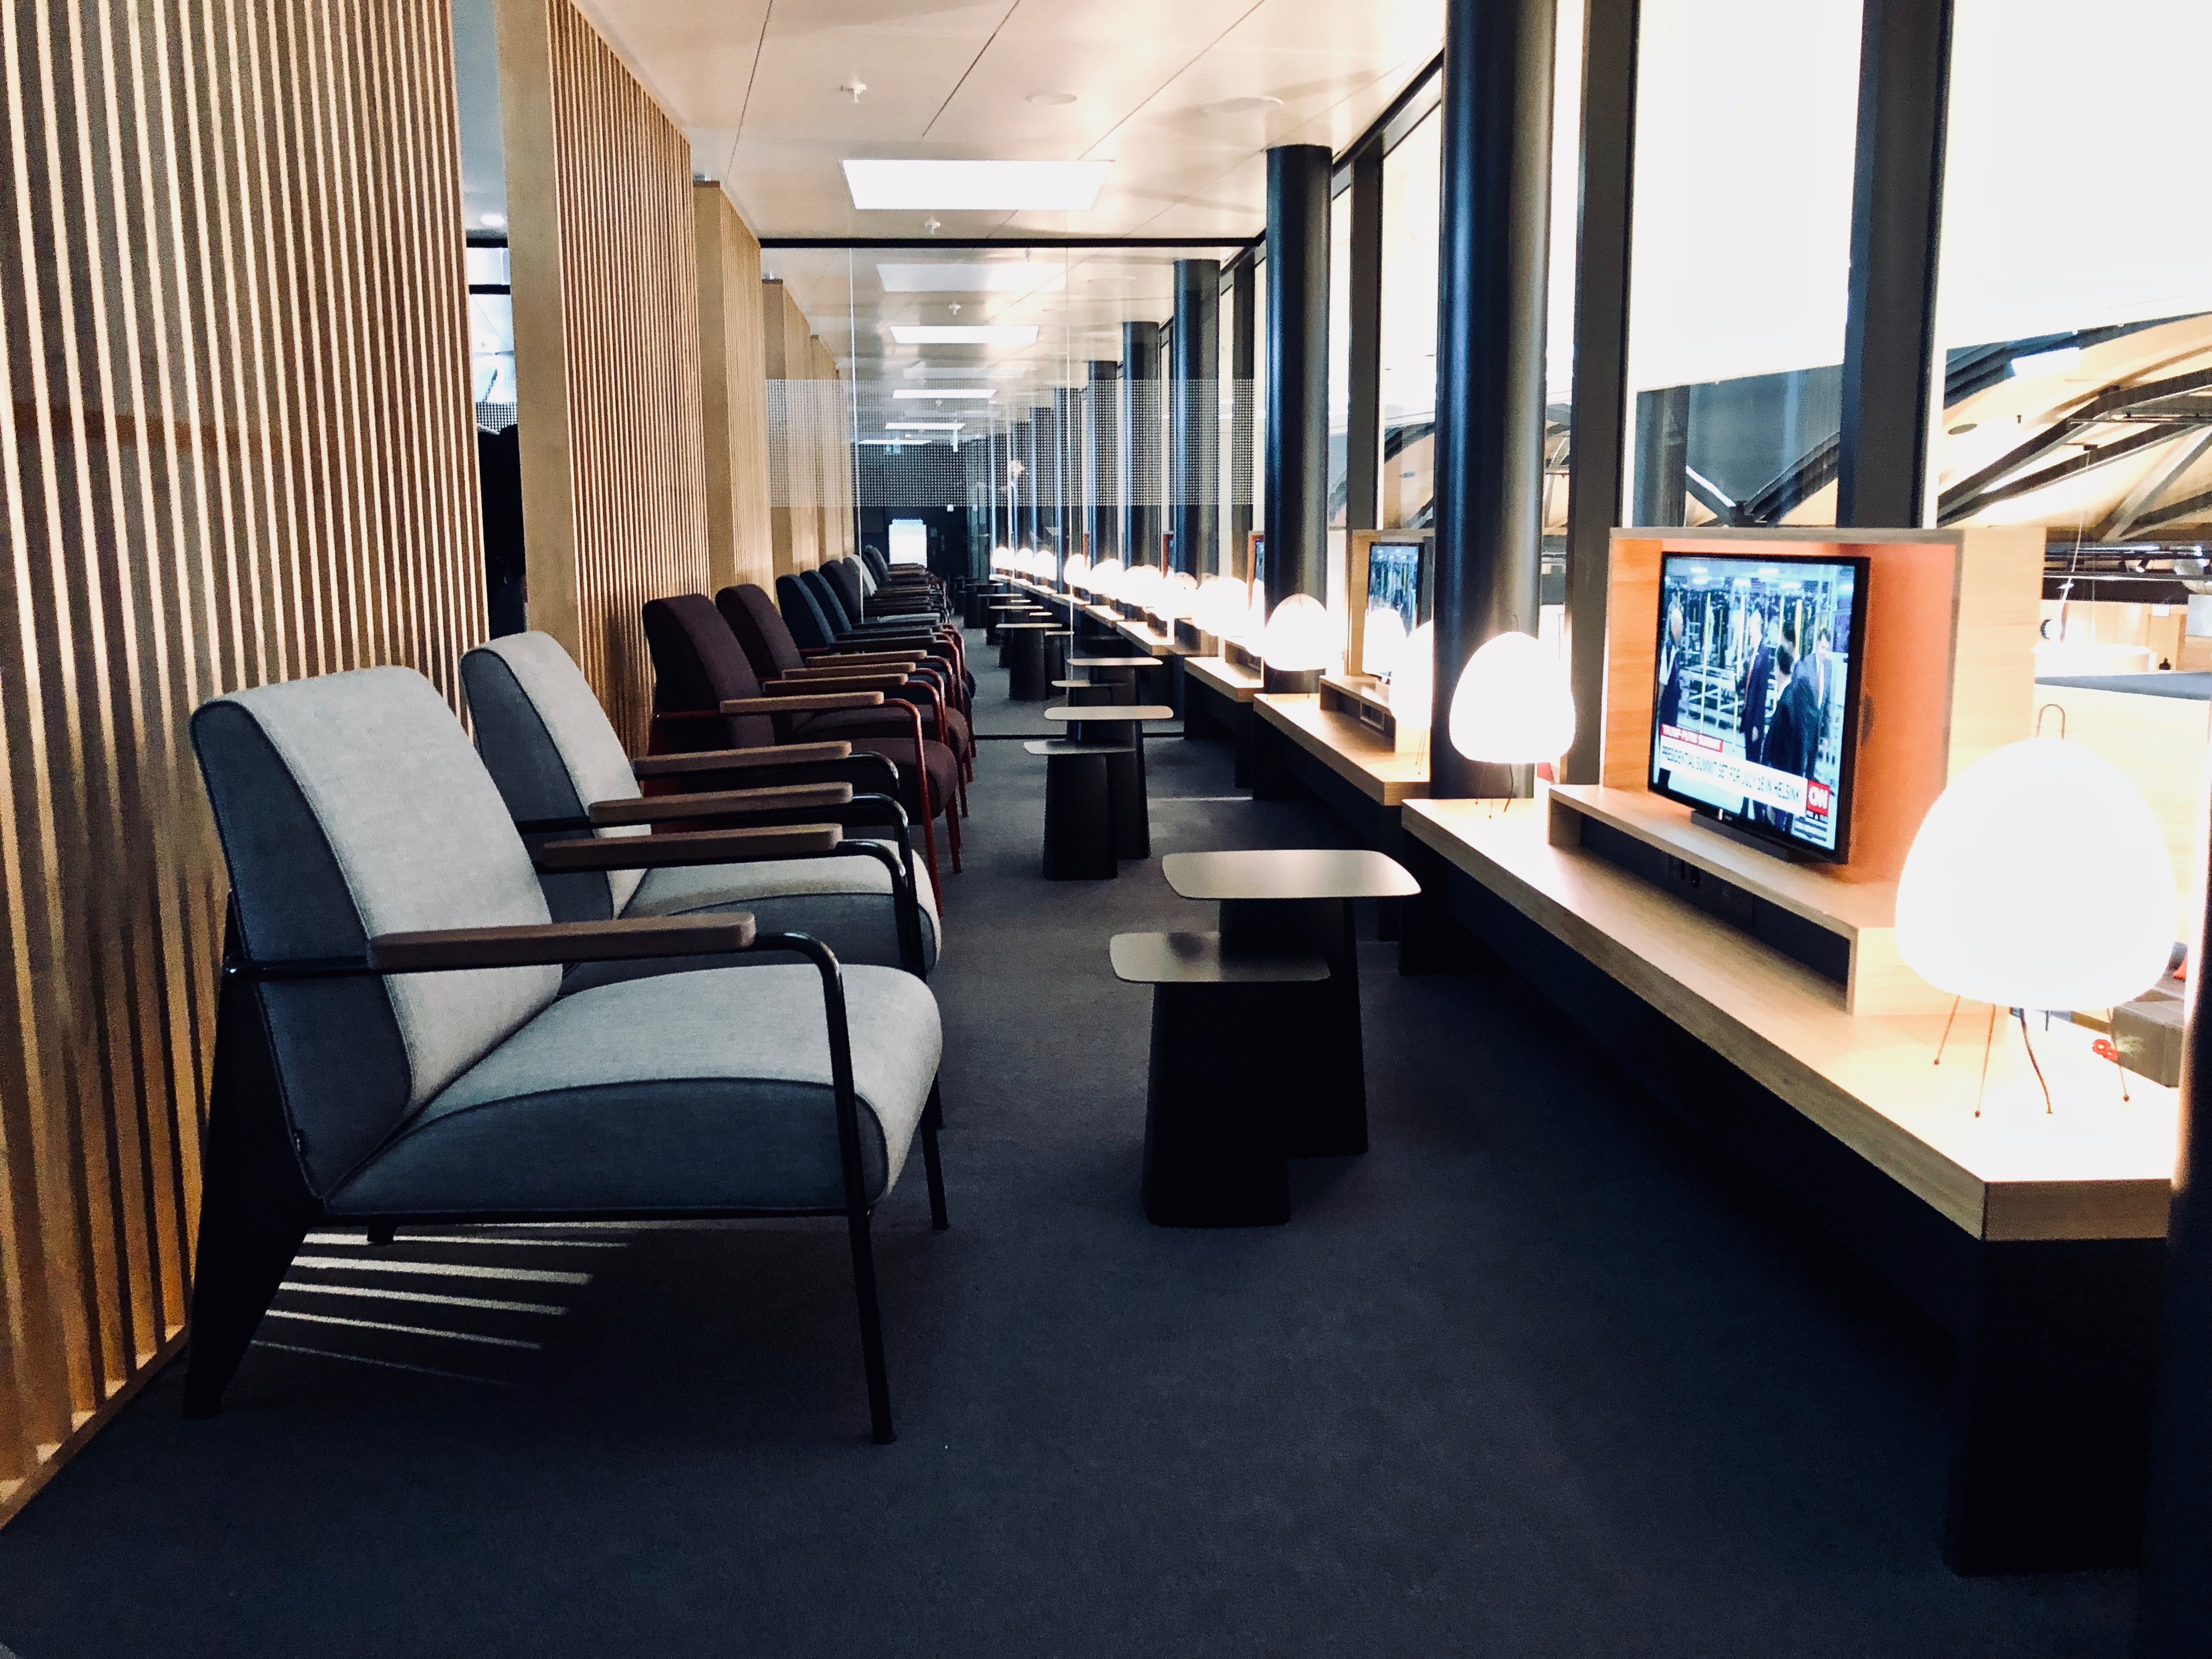 New SWISS lounges in Zurich